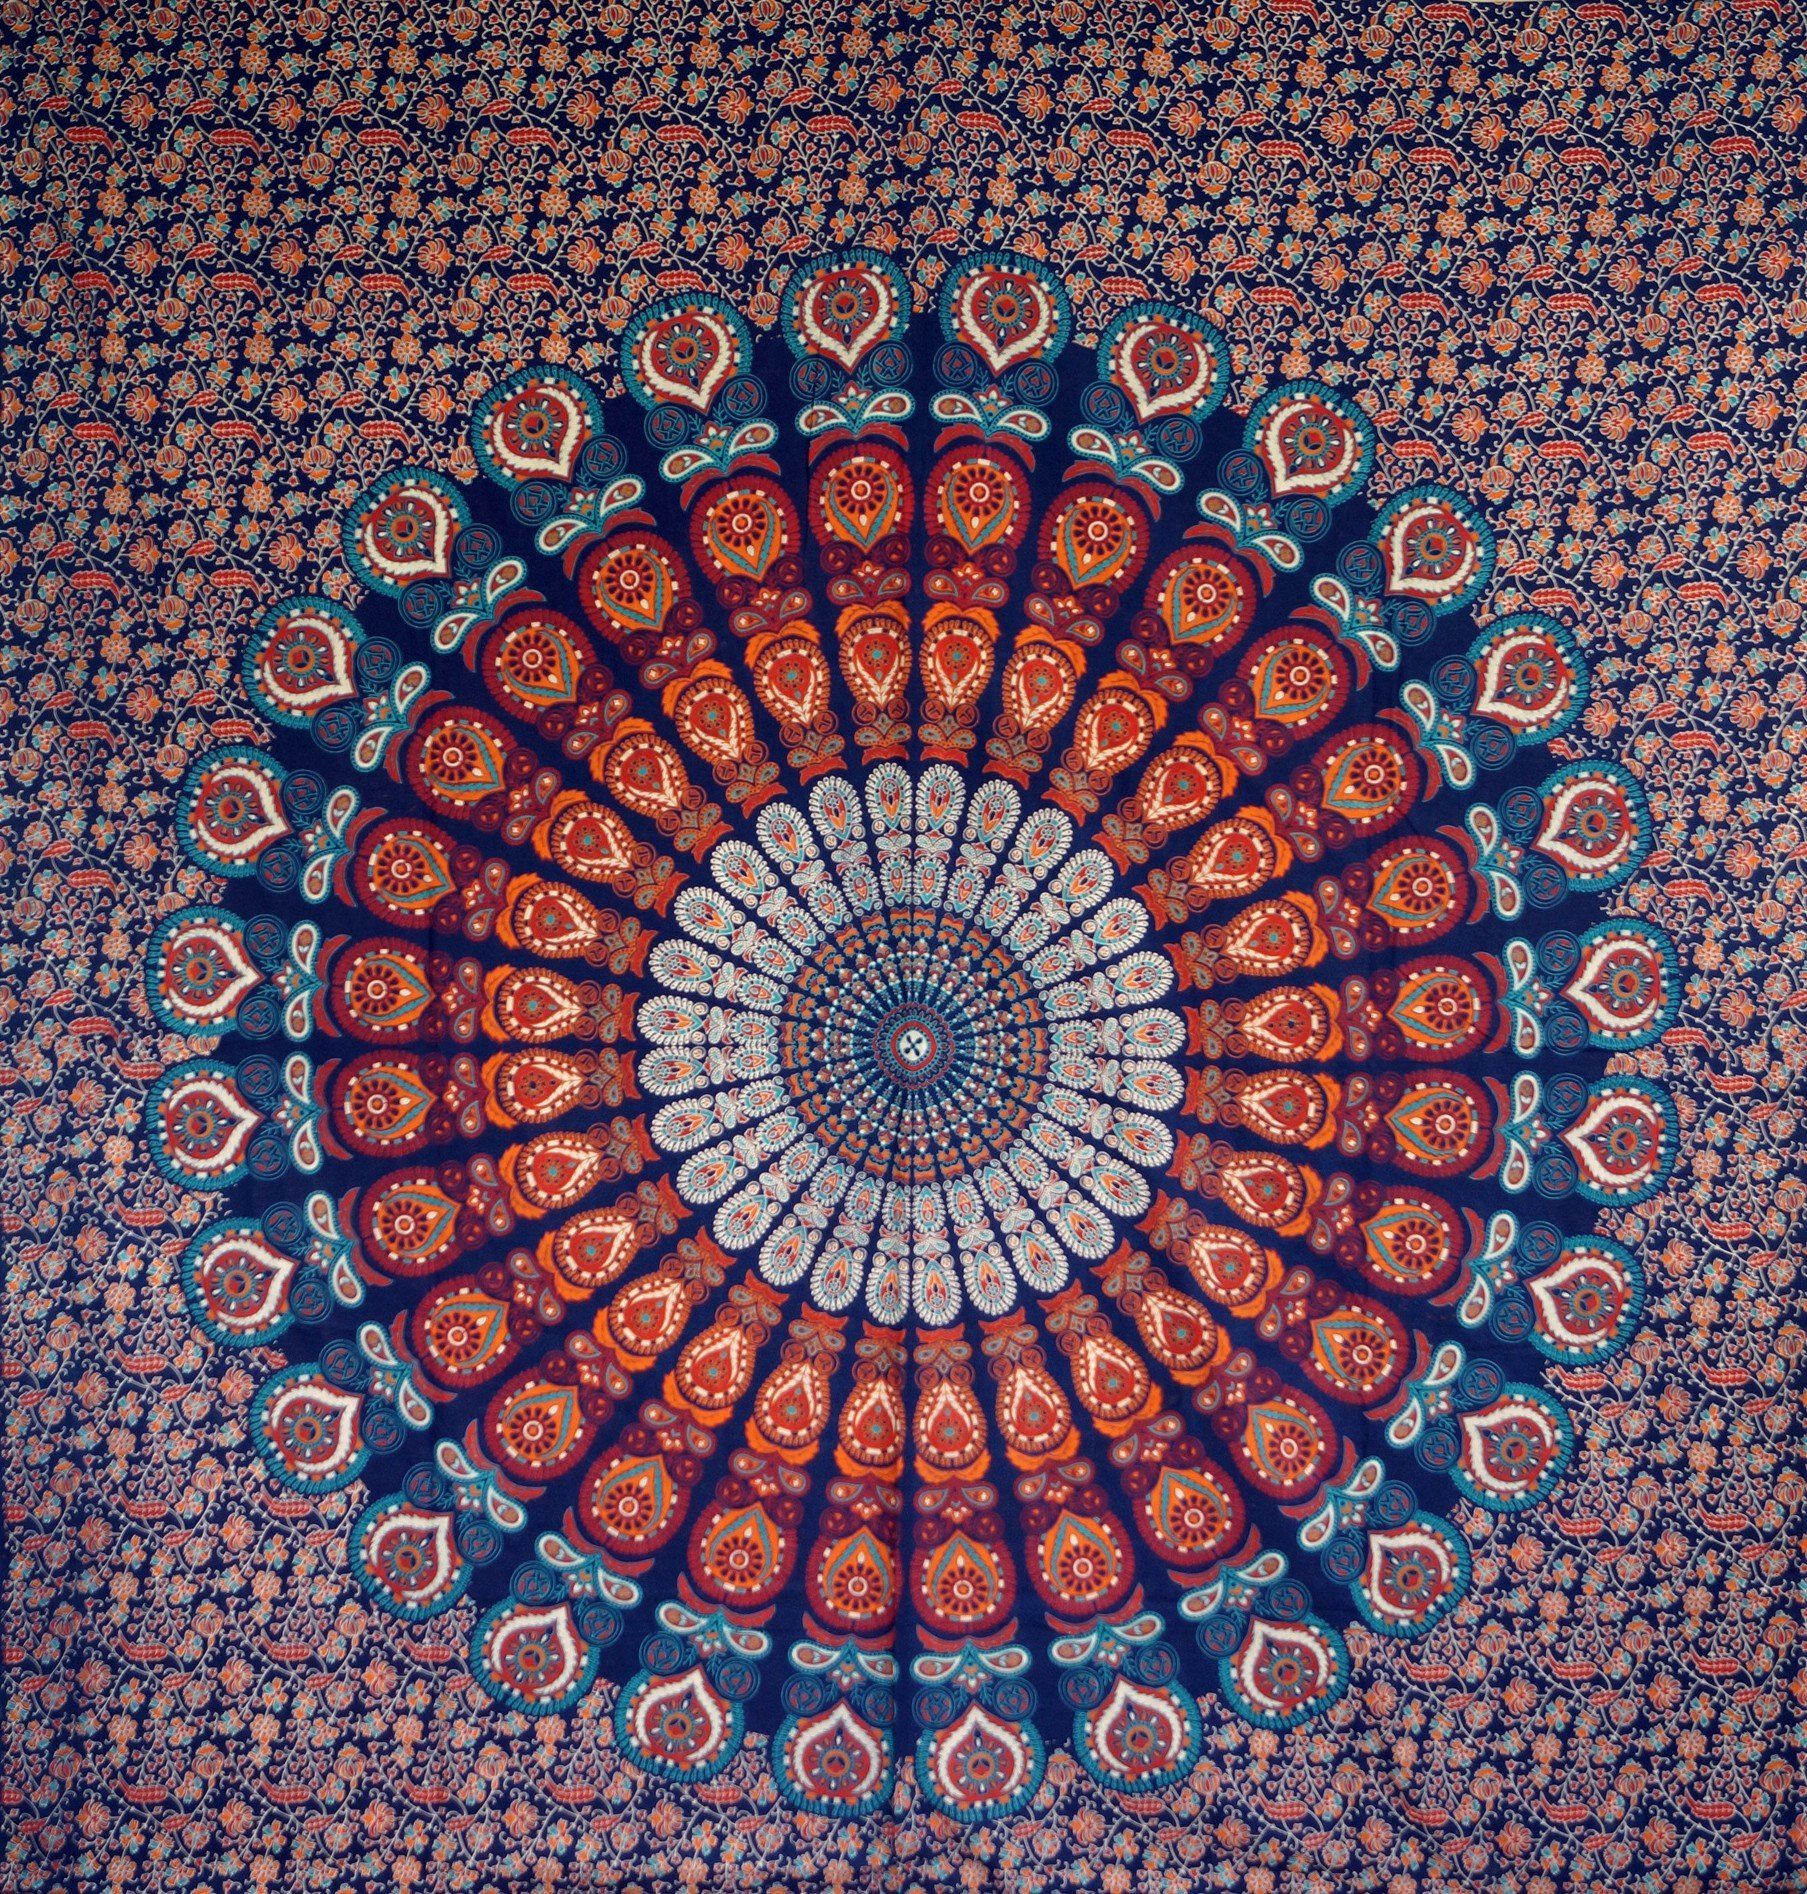 Boho-Style Wandbehang, Tagesdecke.., Guru-Shop Tagesdecke indische